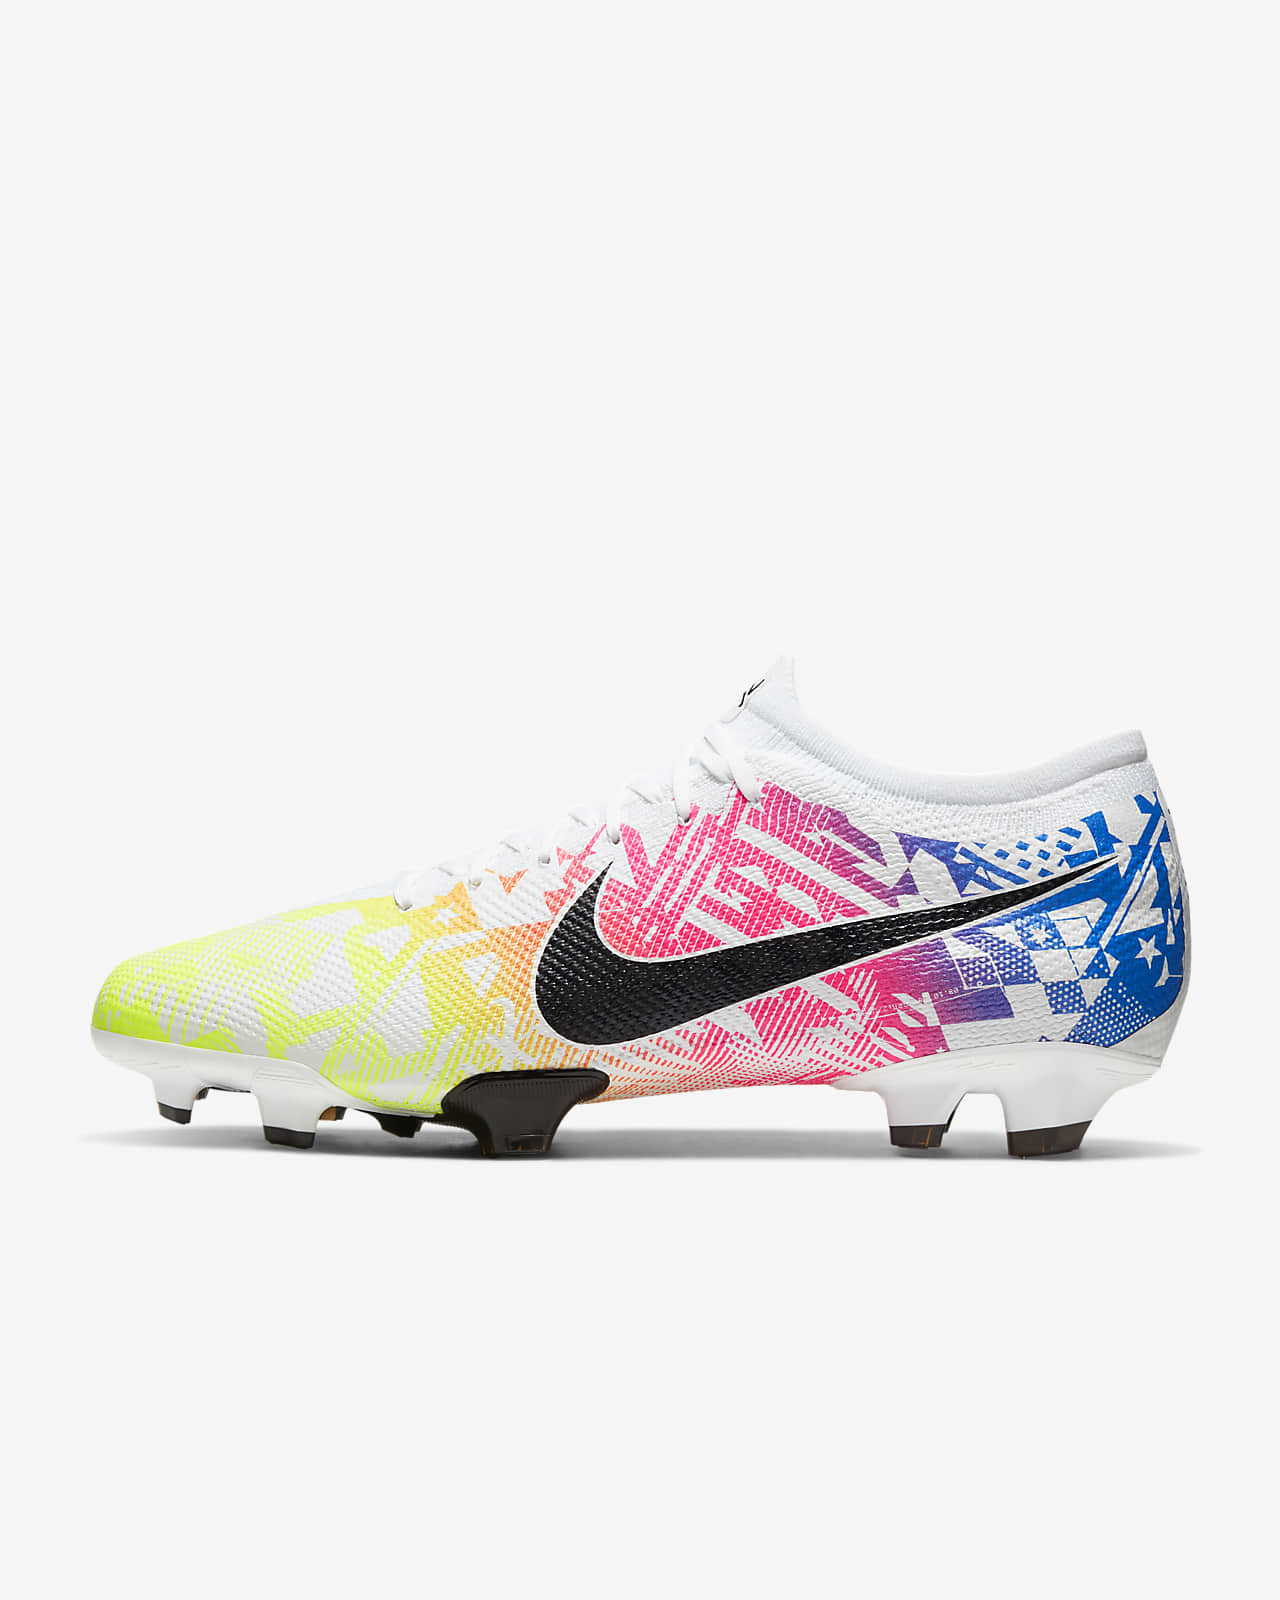 rainbow football boots nike